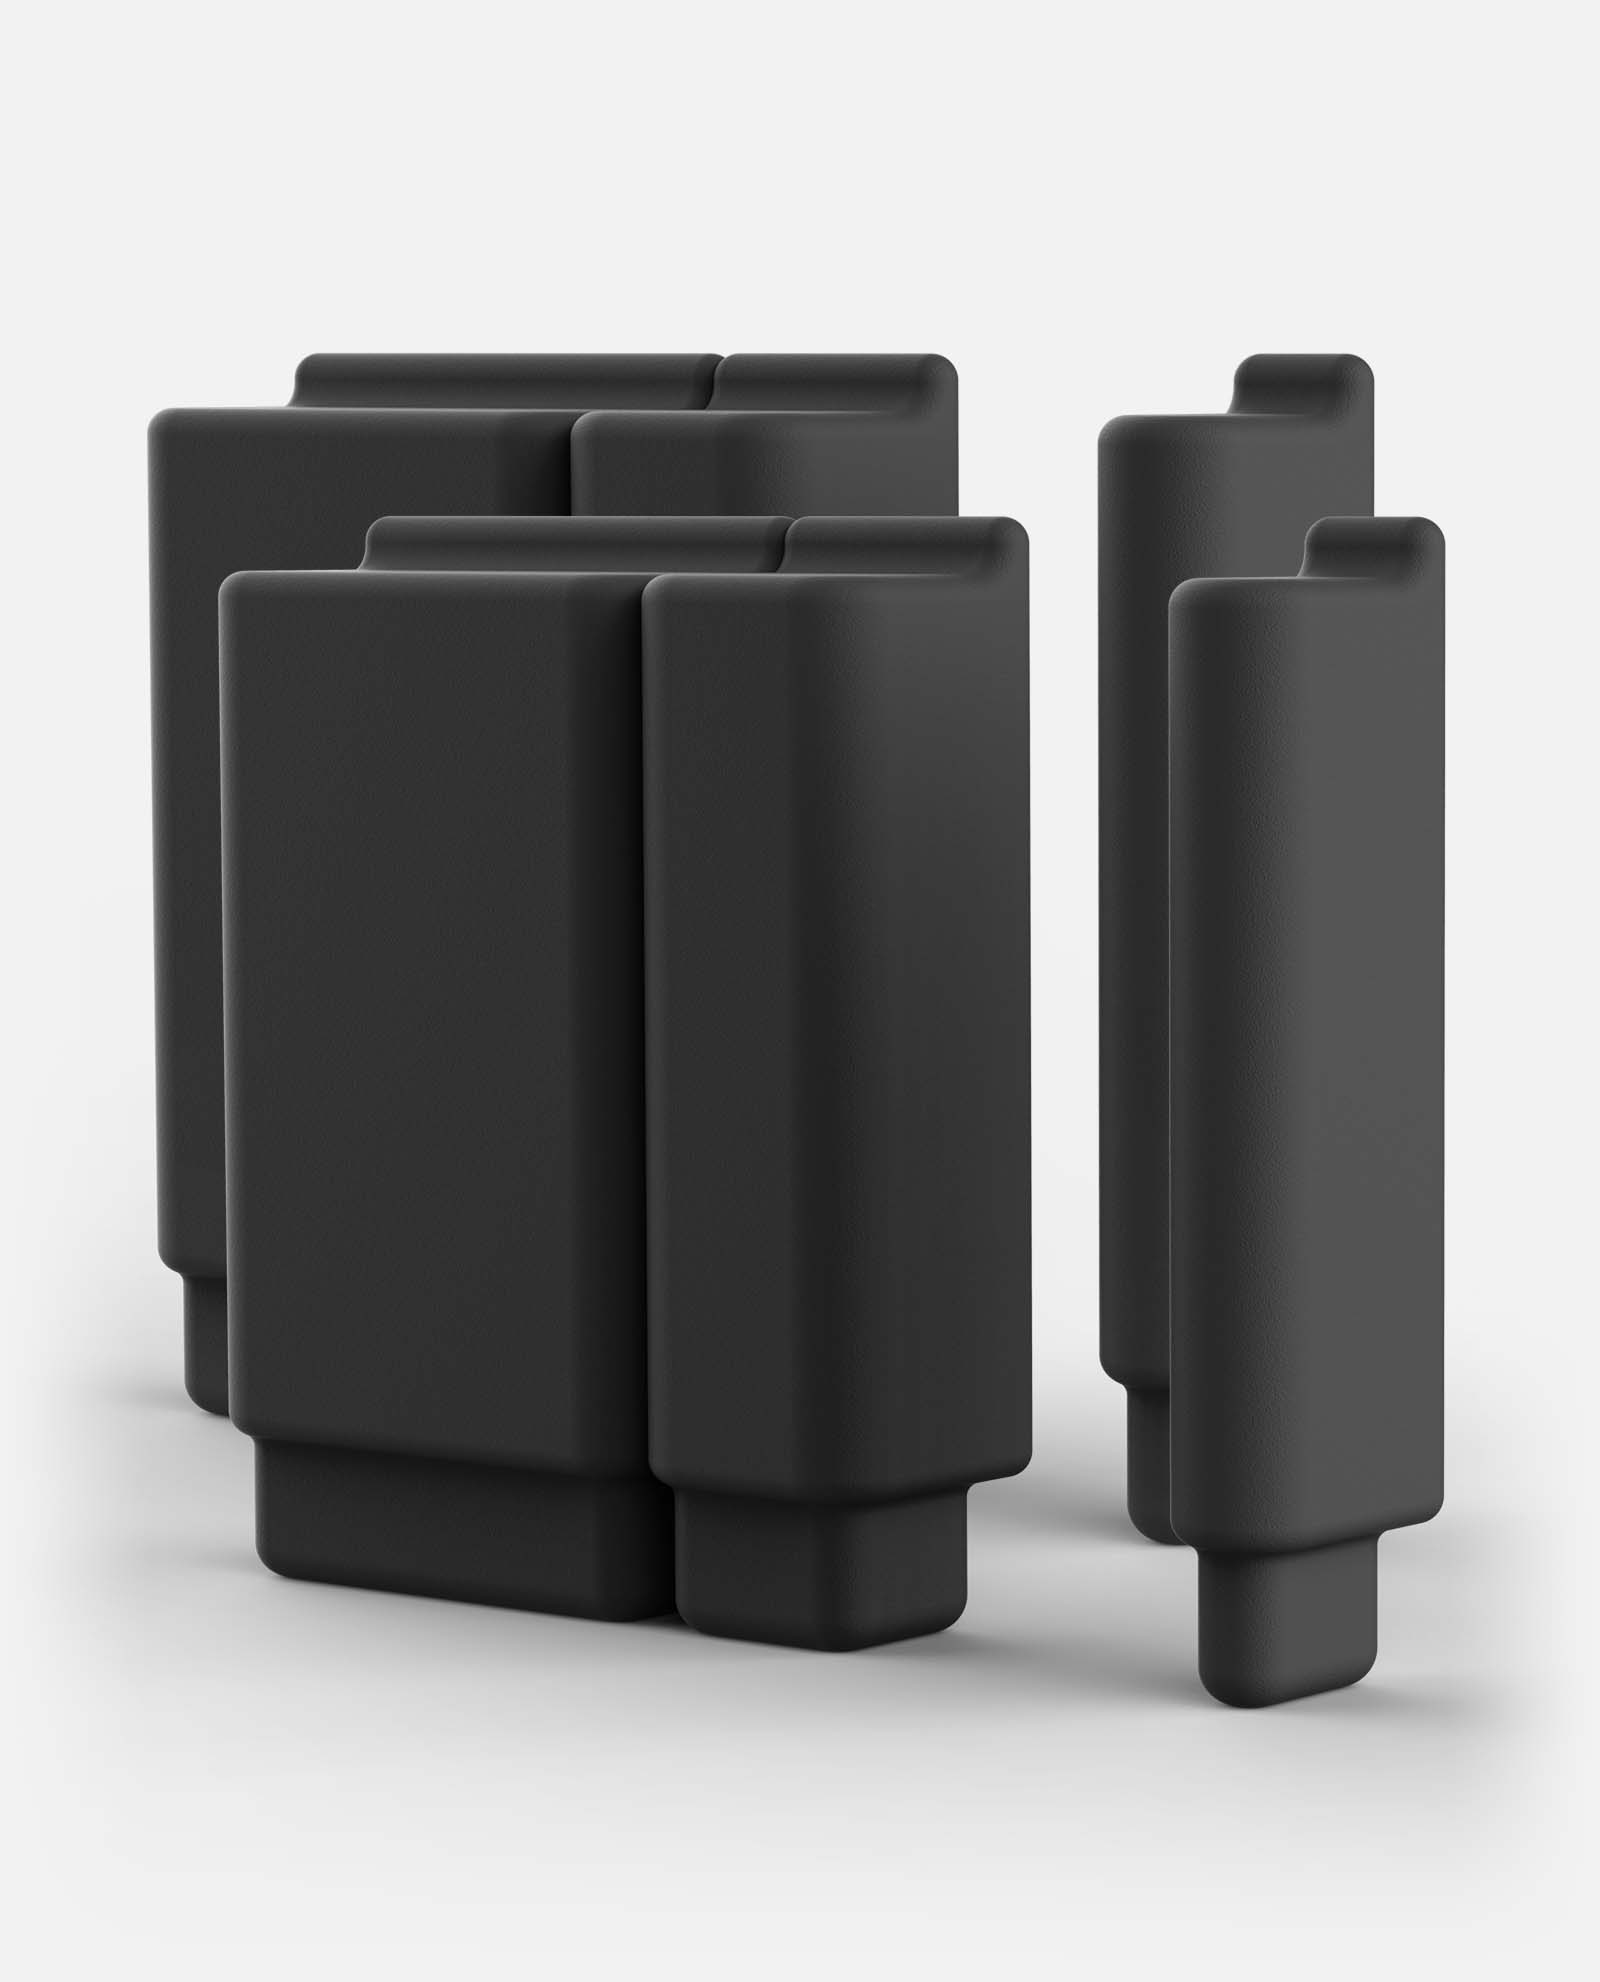 AP1-0003 Soft-Fit Modular Foam Block System (Color: Black)